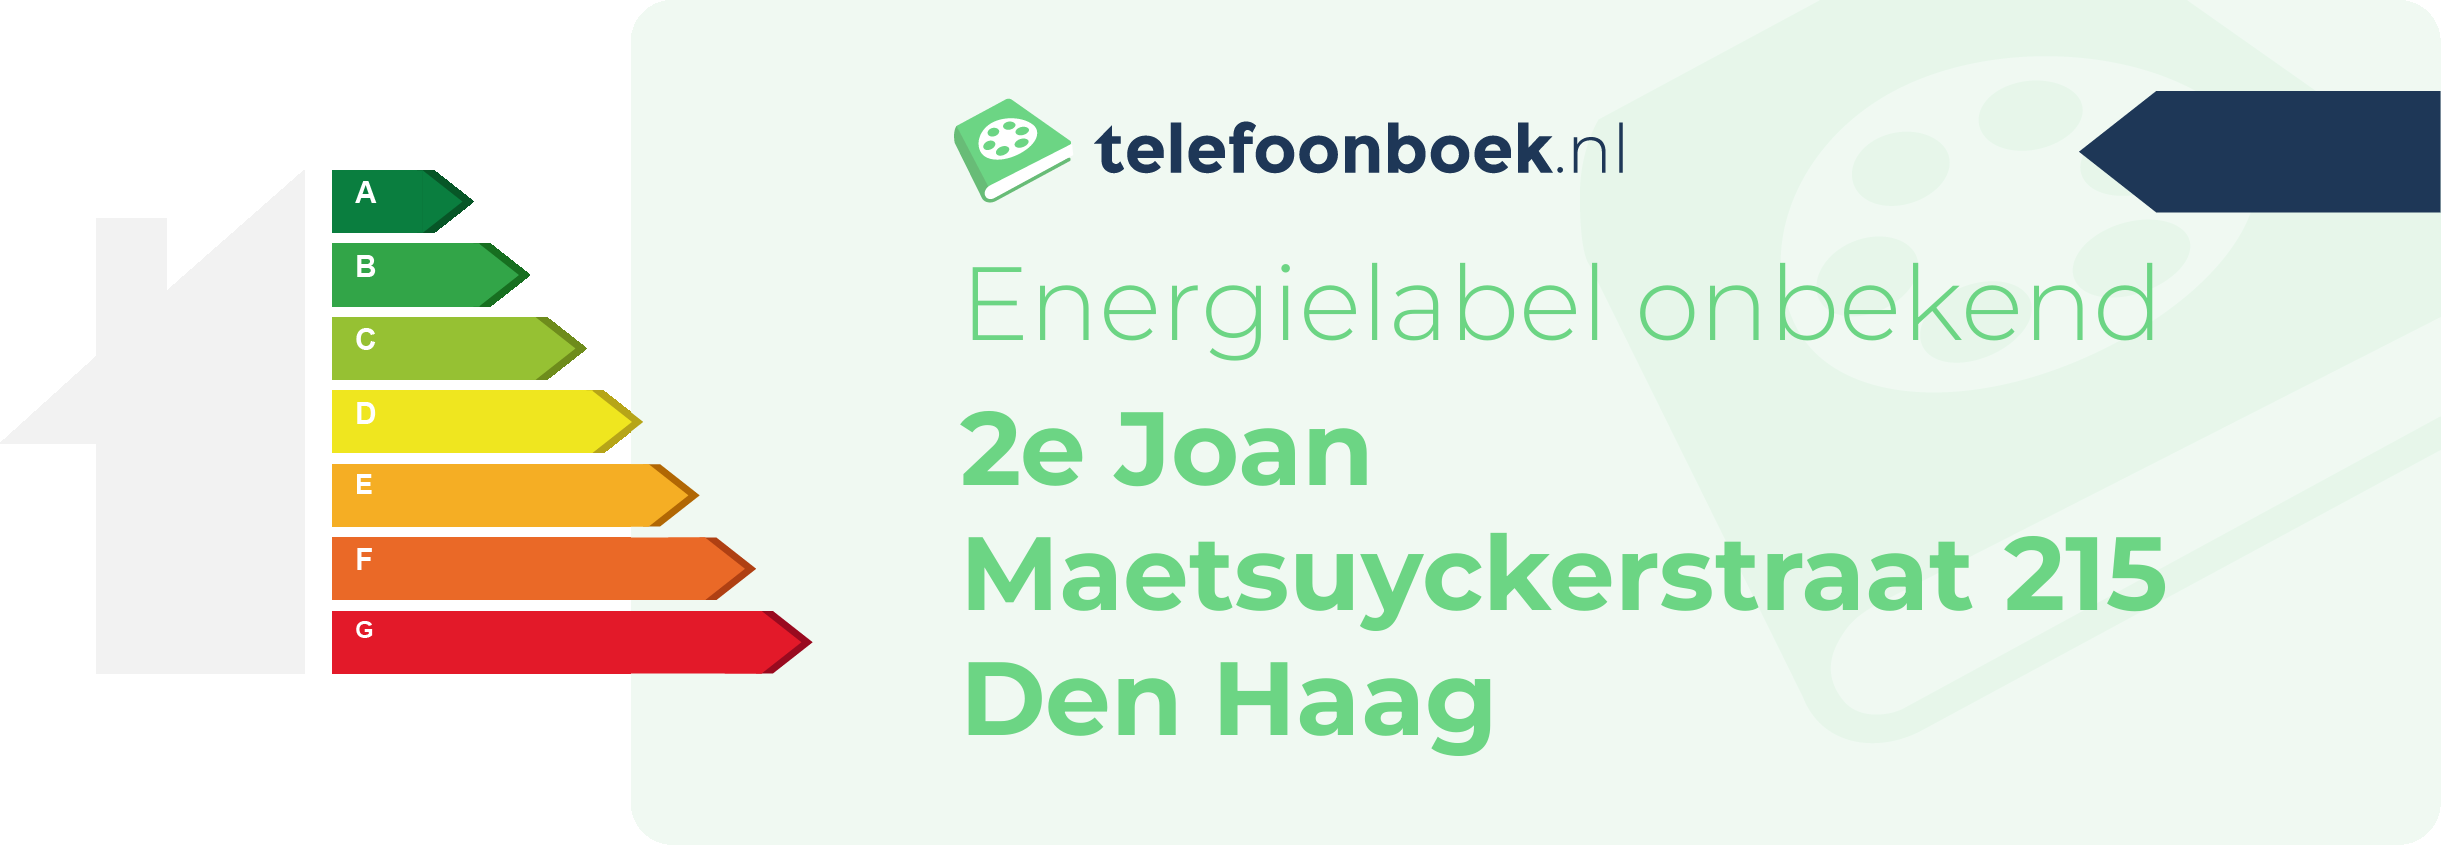 Energielabel 2e Joan Maetsuyckerstraat 215 Den Haag